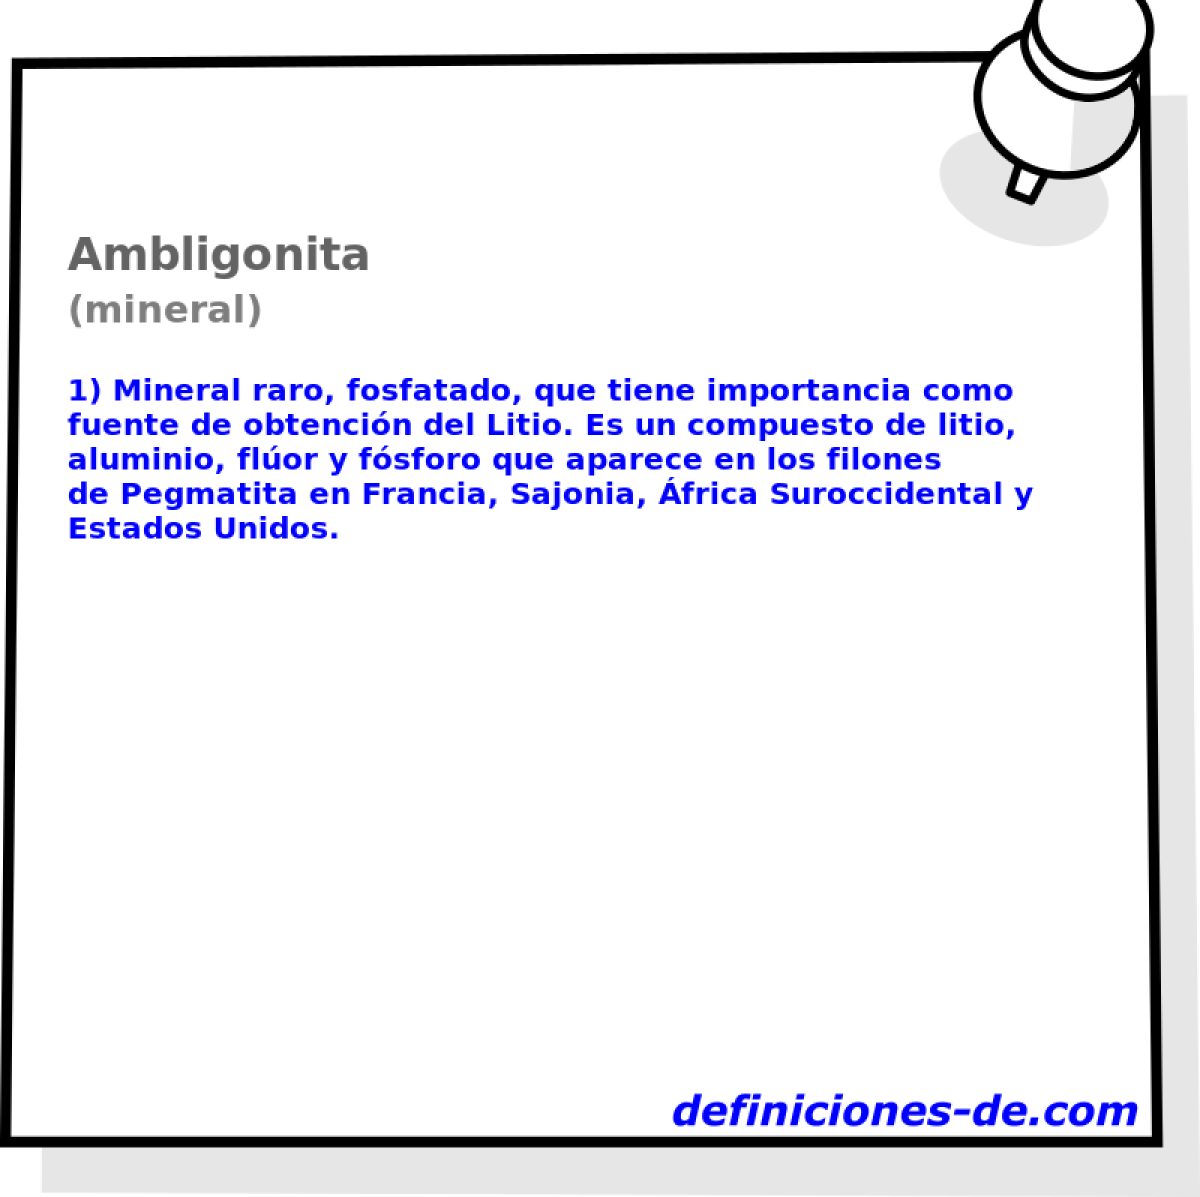 Ambligonita (mineral)